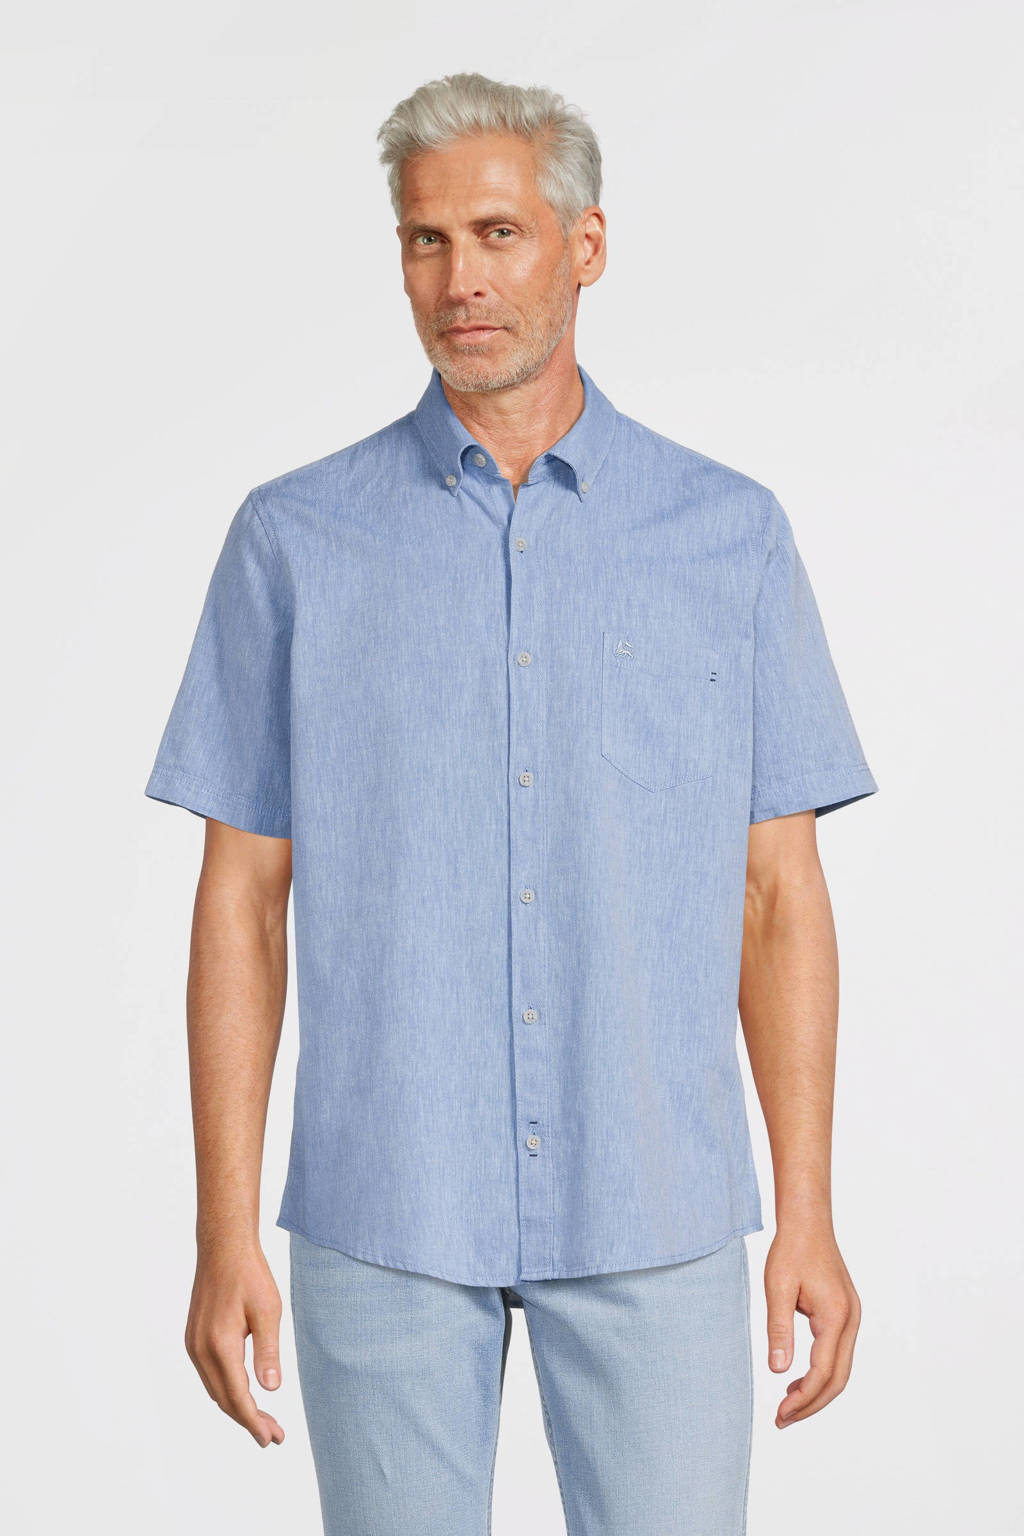 Octrooi Formulering Savant LERROS gemêleerd regular fit overhemd met linnen light blue | wehkamp